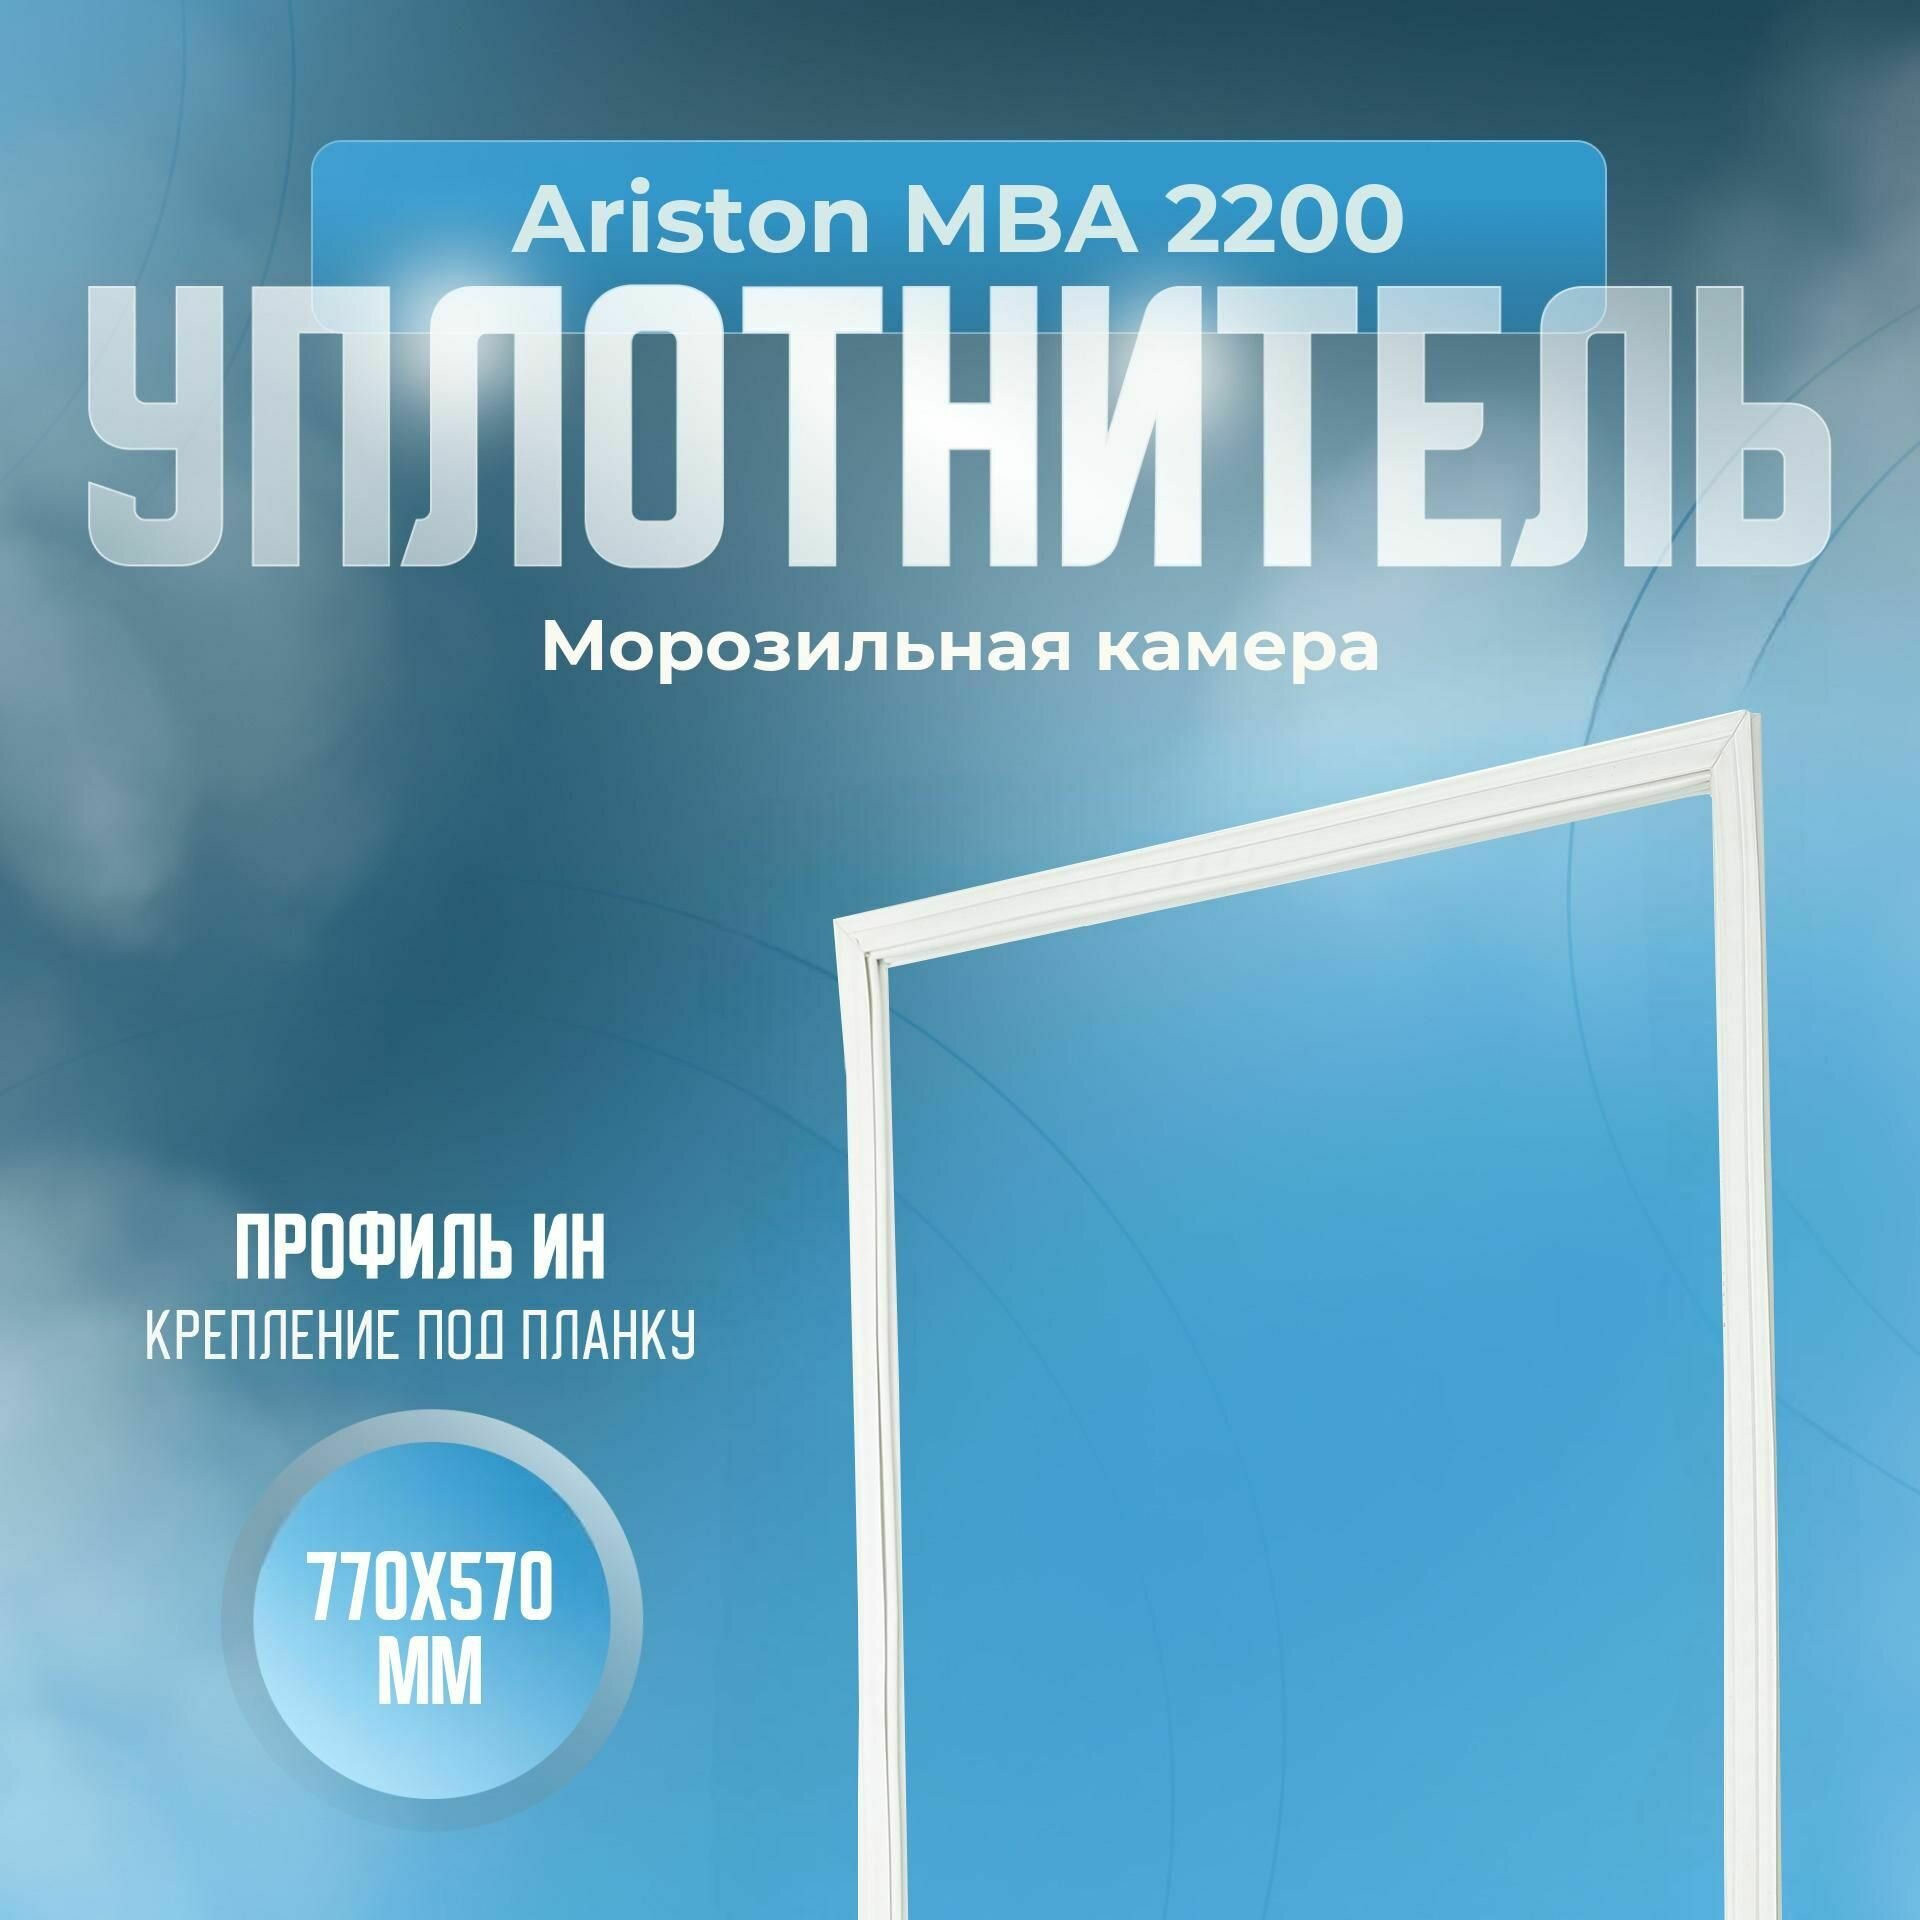 Уплотнитель Ariston MBA 2200. м. к, Размер - 770х570 мм. ИН